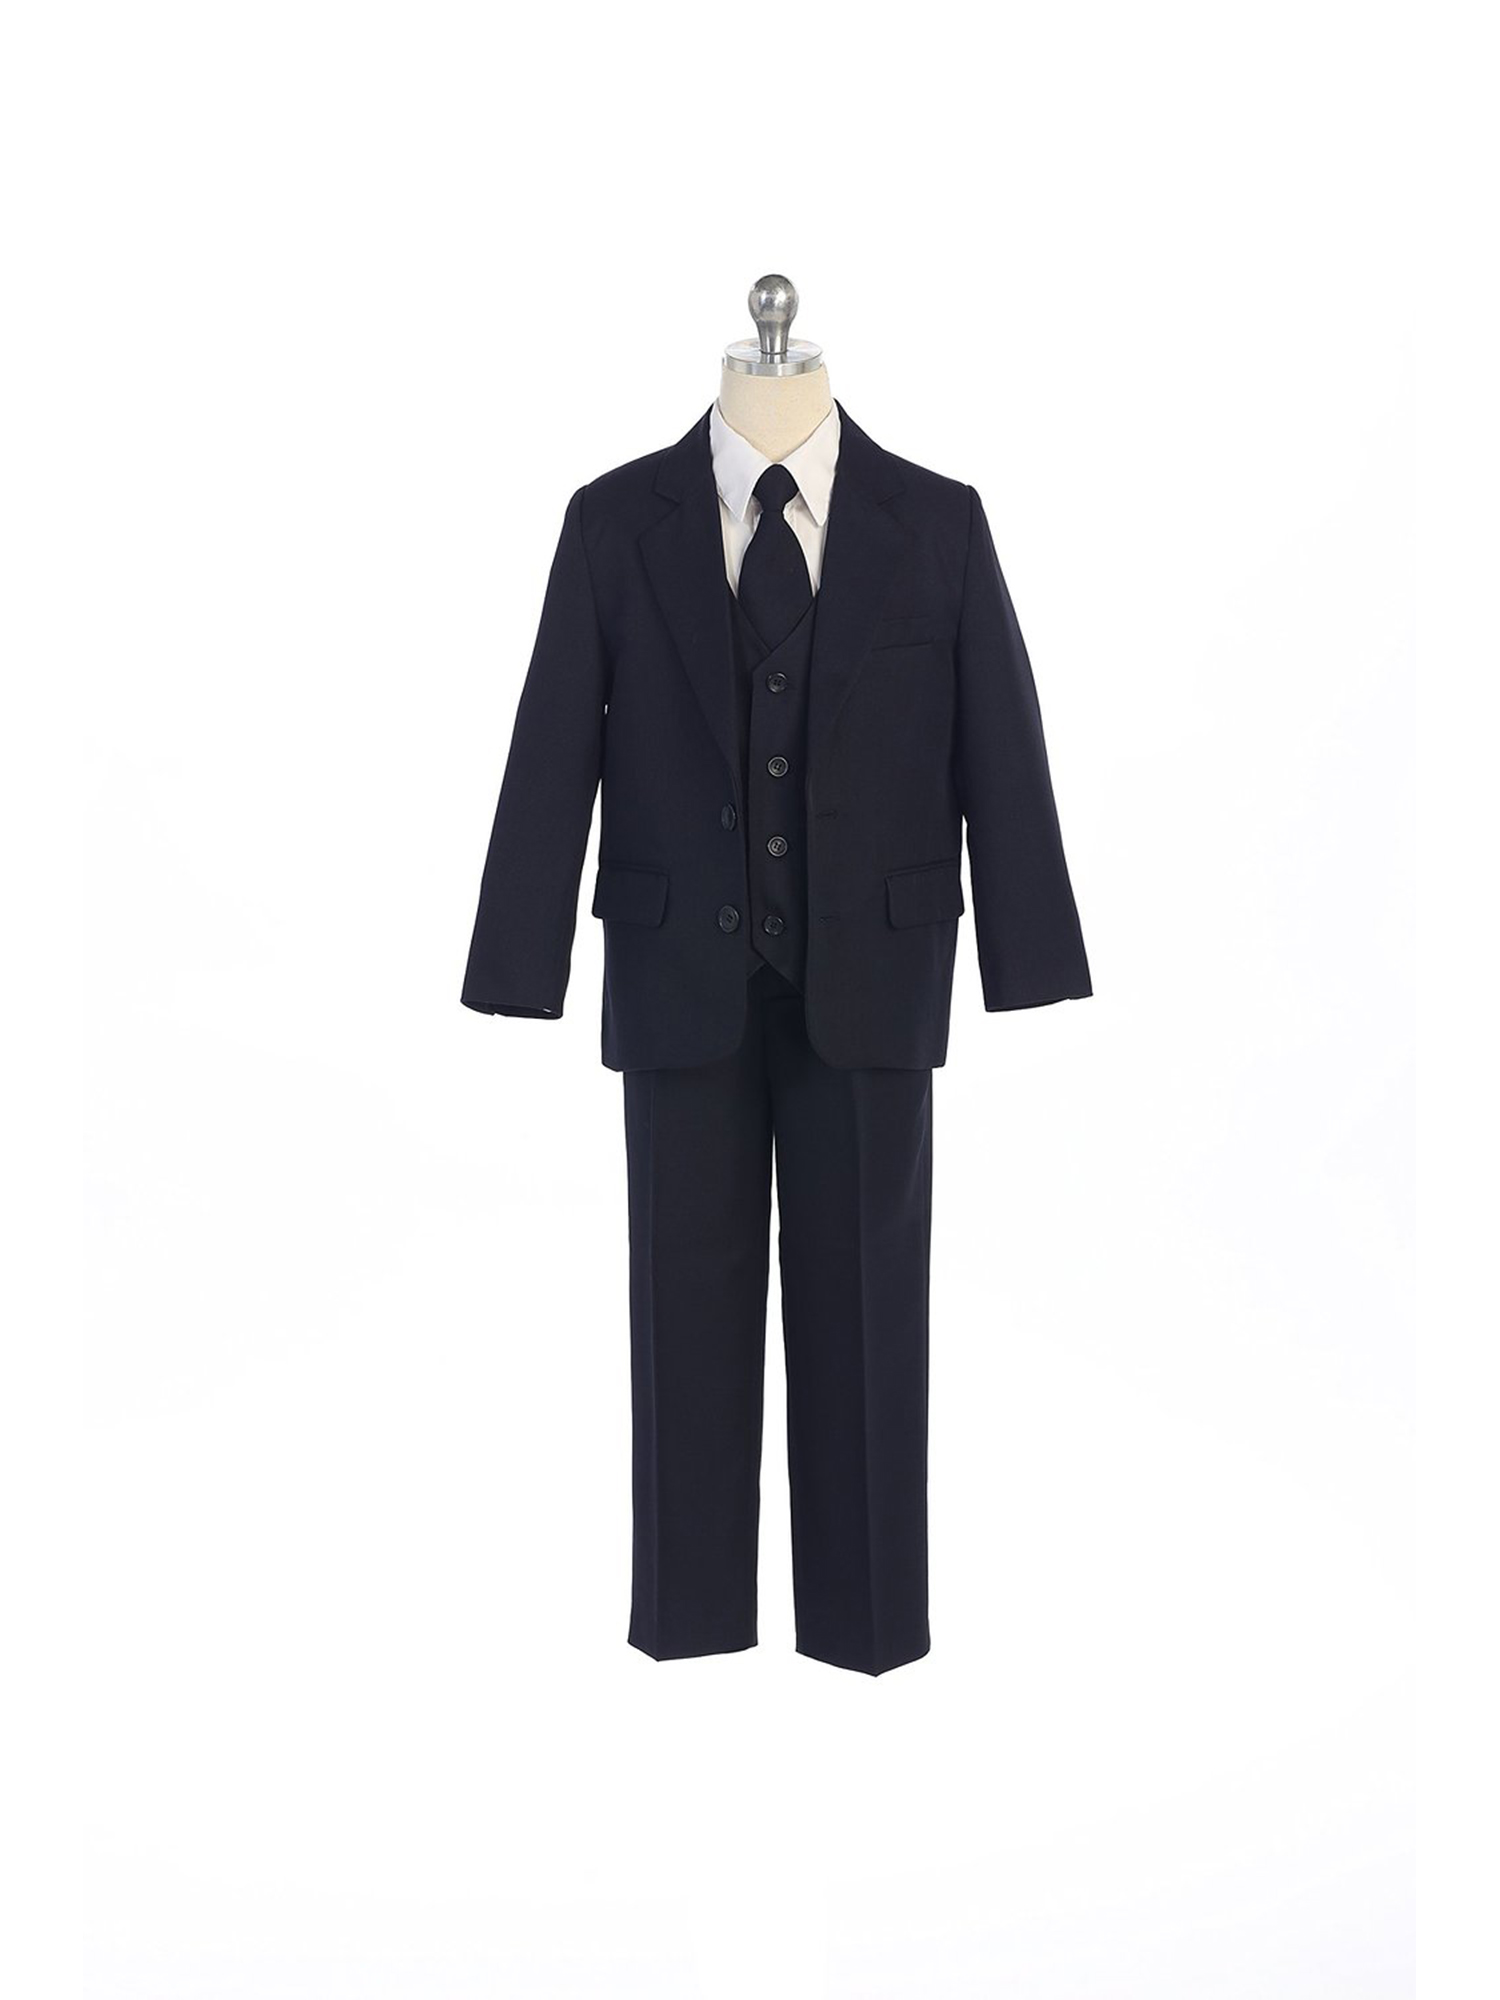 COLE Boys Suit with Shirt and Vest (5-Piece) - Navy Blue - Size 2